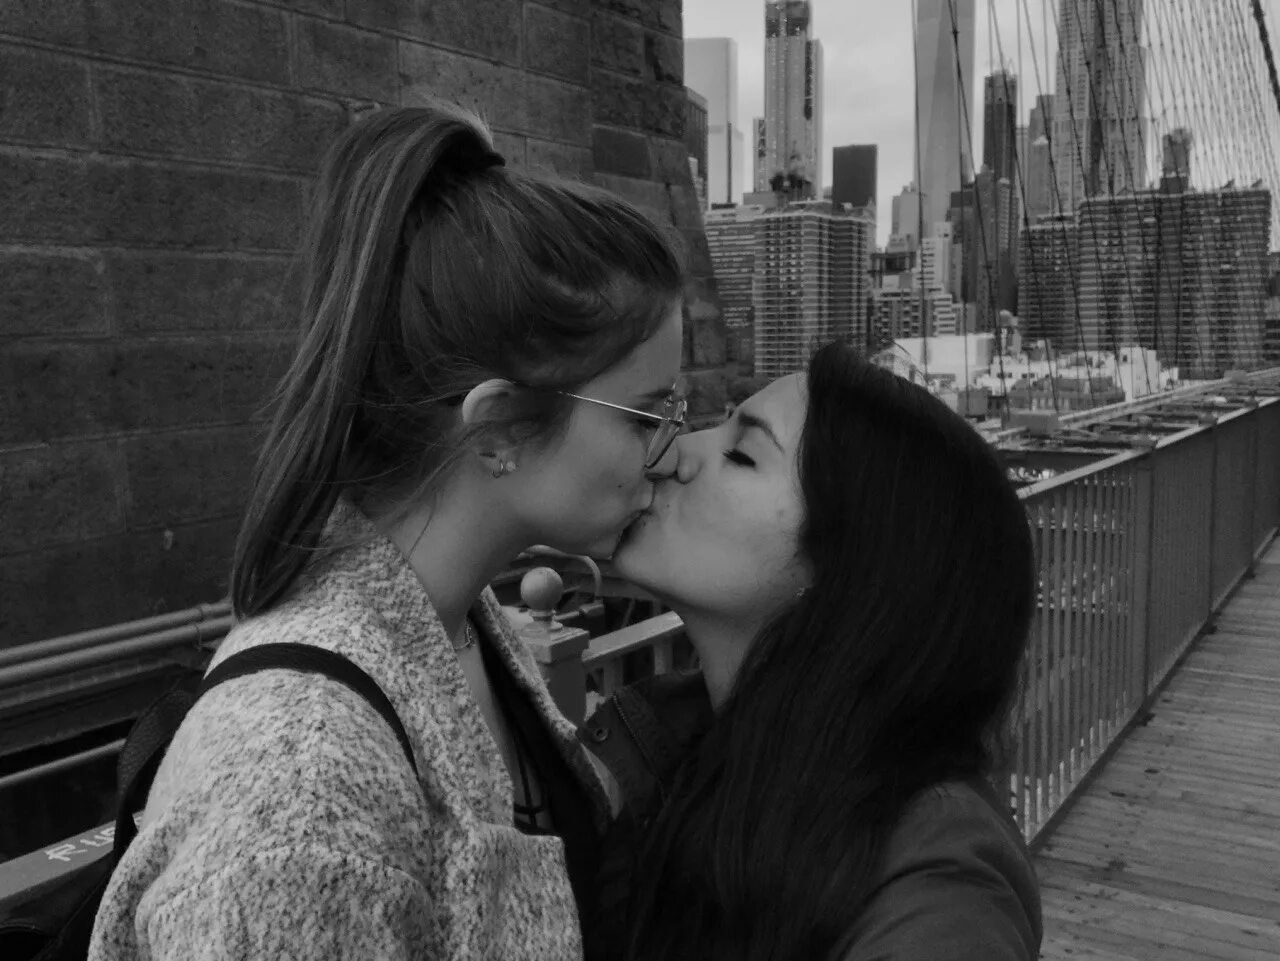 Doing lesbian. Поцелуй девушек. Девушки целуются. Поцелуй девушки с девушкой. Поцелуй двух девушек.